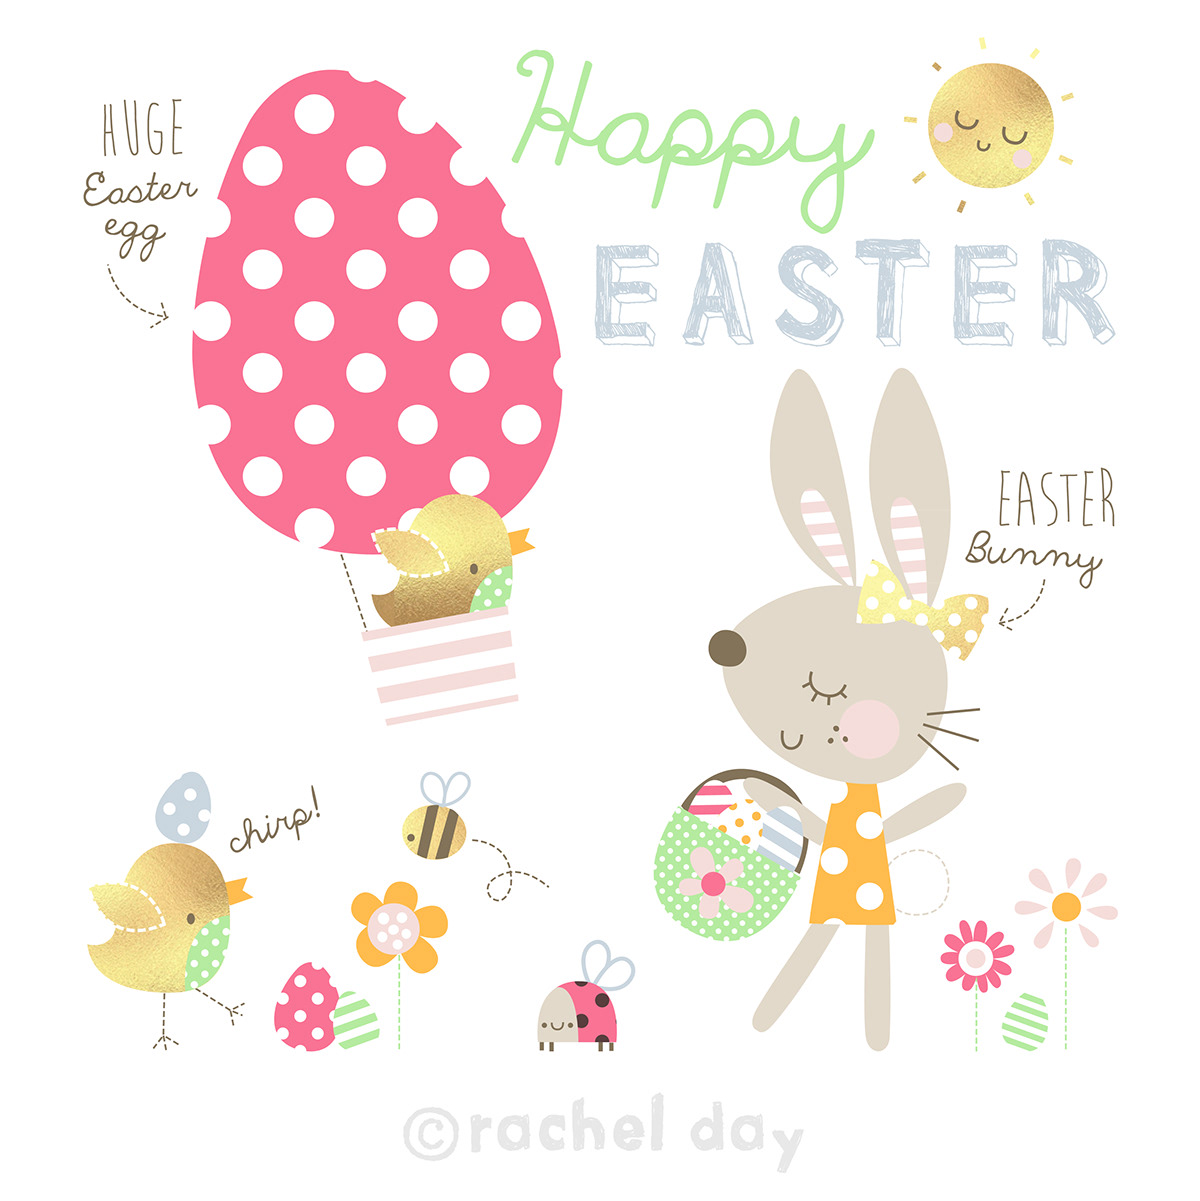 Easter greetings cards print Character cute